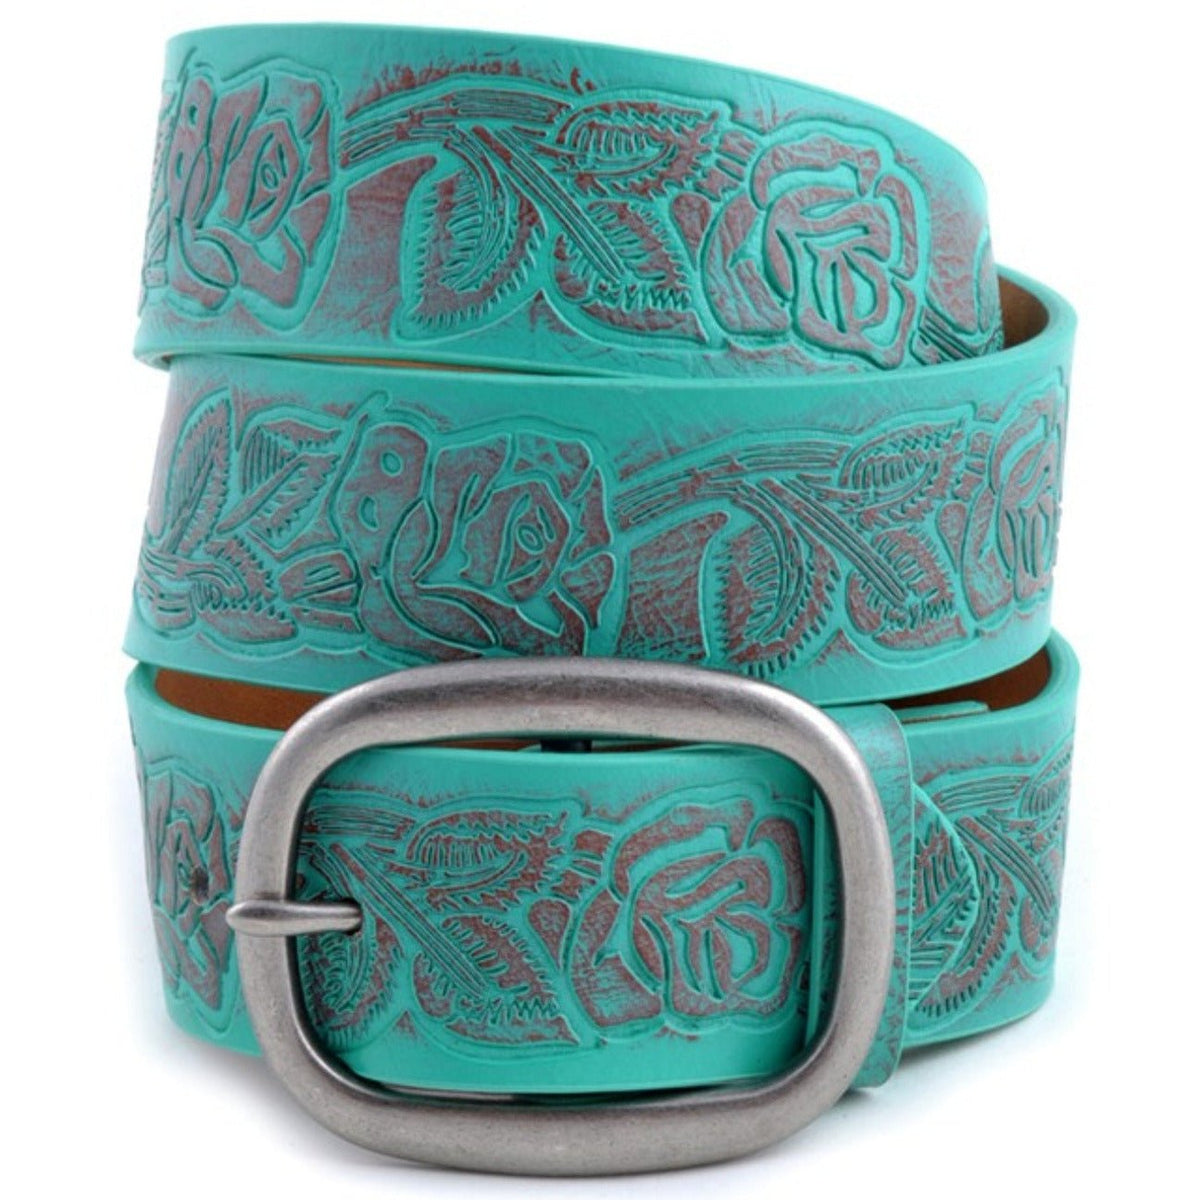 Turquoise stamped belt. Western-style belt. The Fringe Co